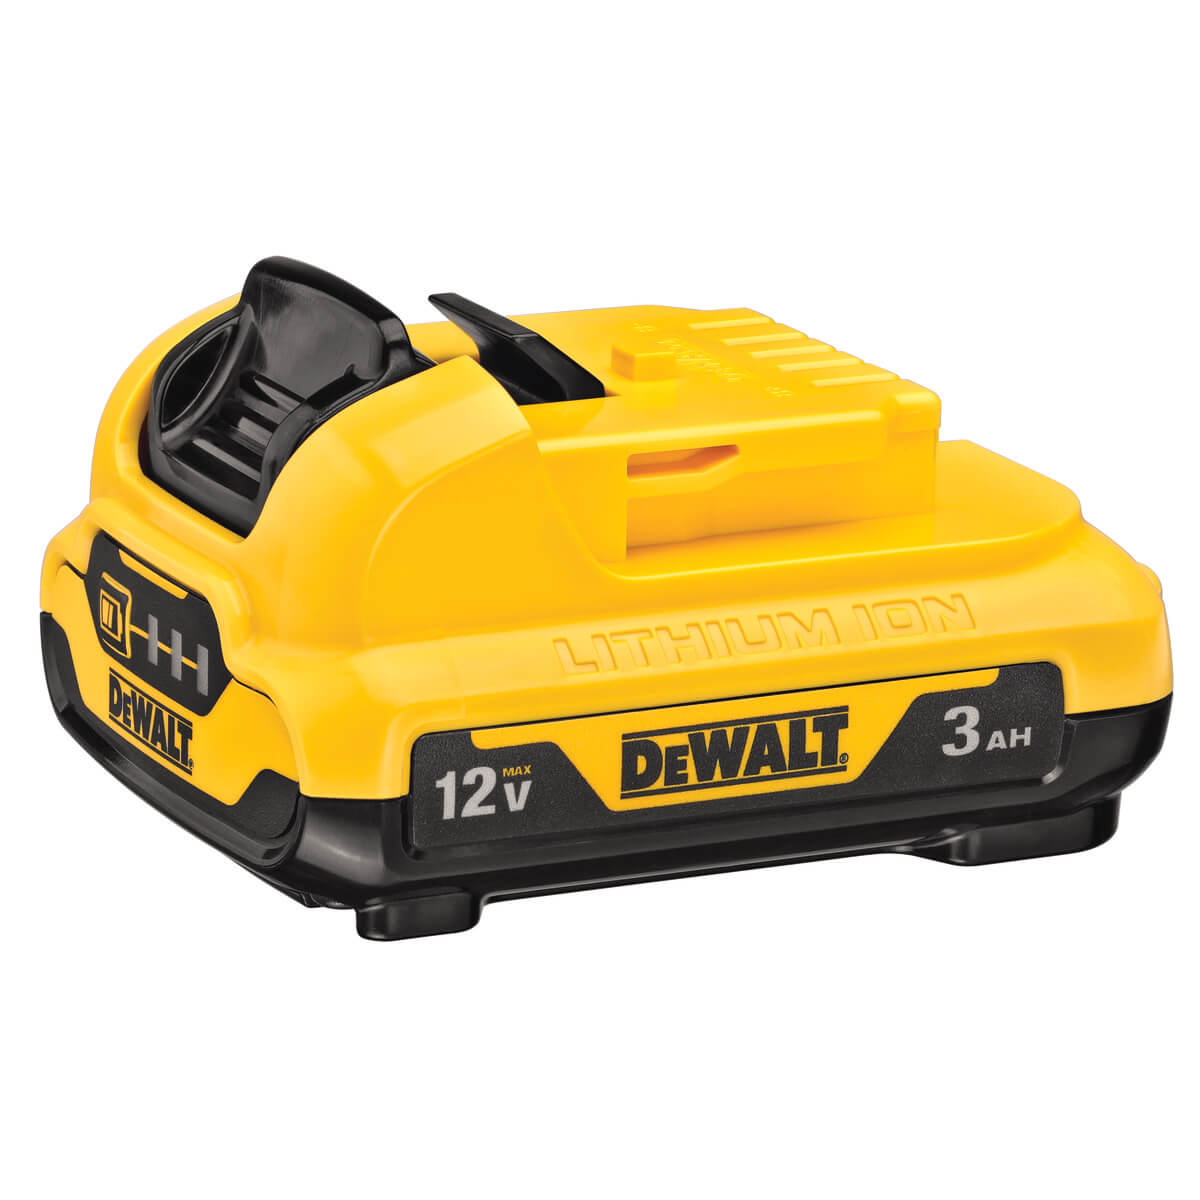 DEWALT DCB124 12V MAX* 3AH LITHIUM ION BATTERY - wise-line-tools